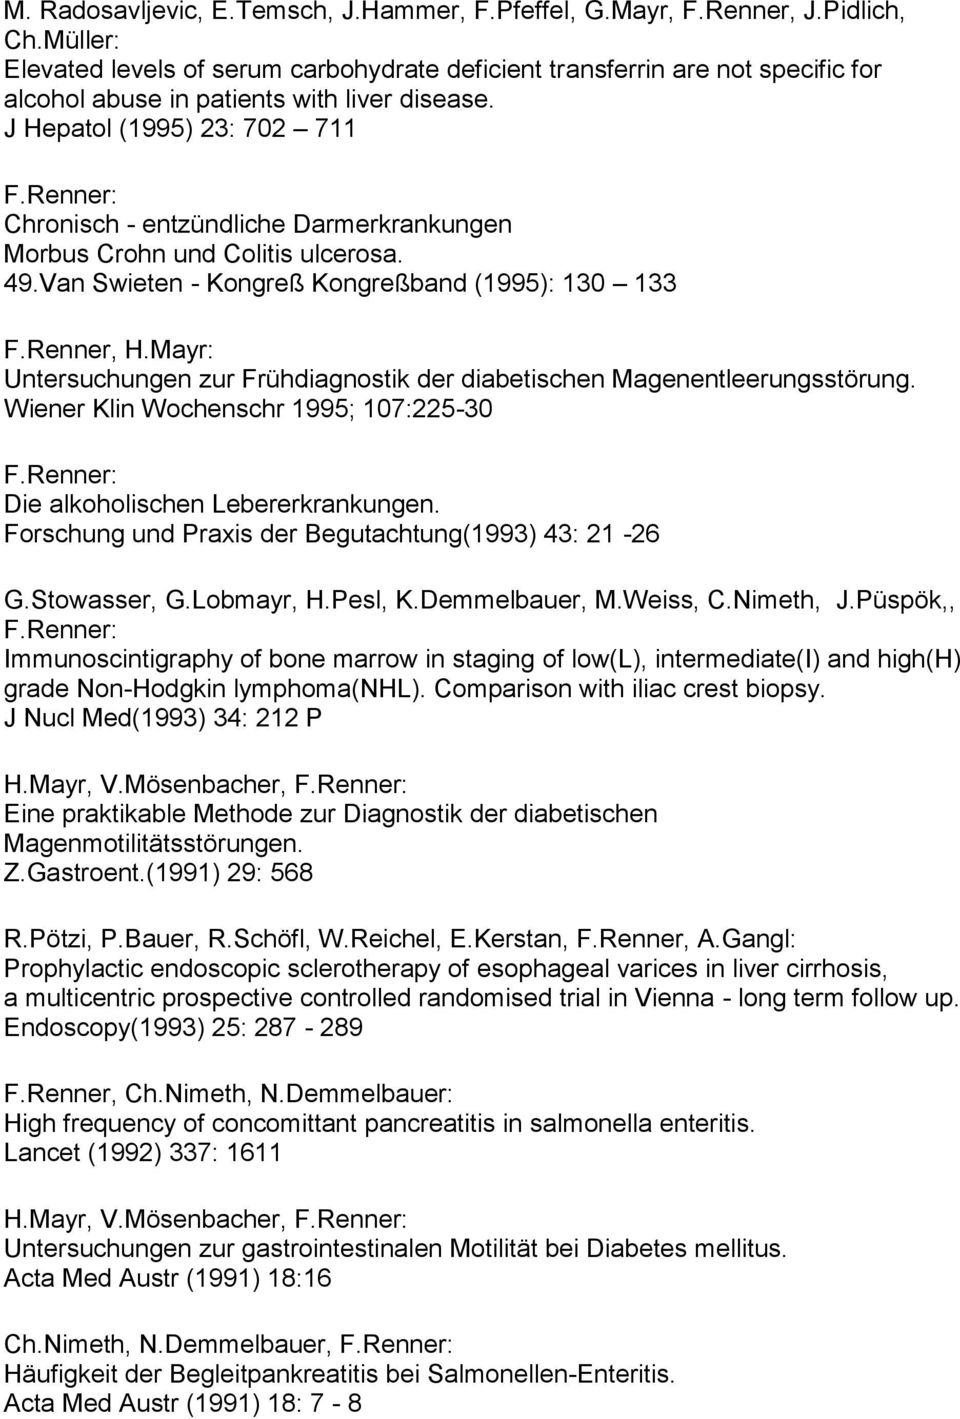 J Hepatol (1995) 23: 702 711 Chronisch - entzündliche Darmerkrankungen Morbus Crohn und Colitis ulcerosa. 49.Van Swieten - Kongreß Kongreßband (1995): 130 133 F.Renner, H.